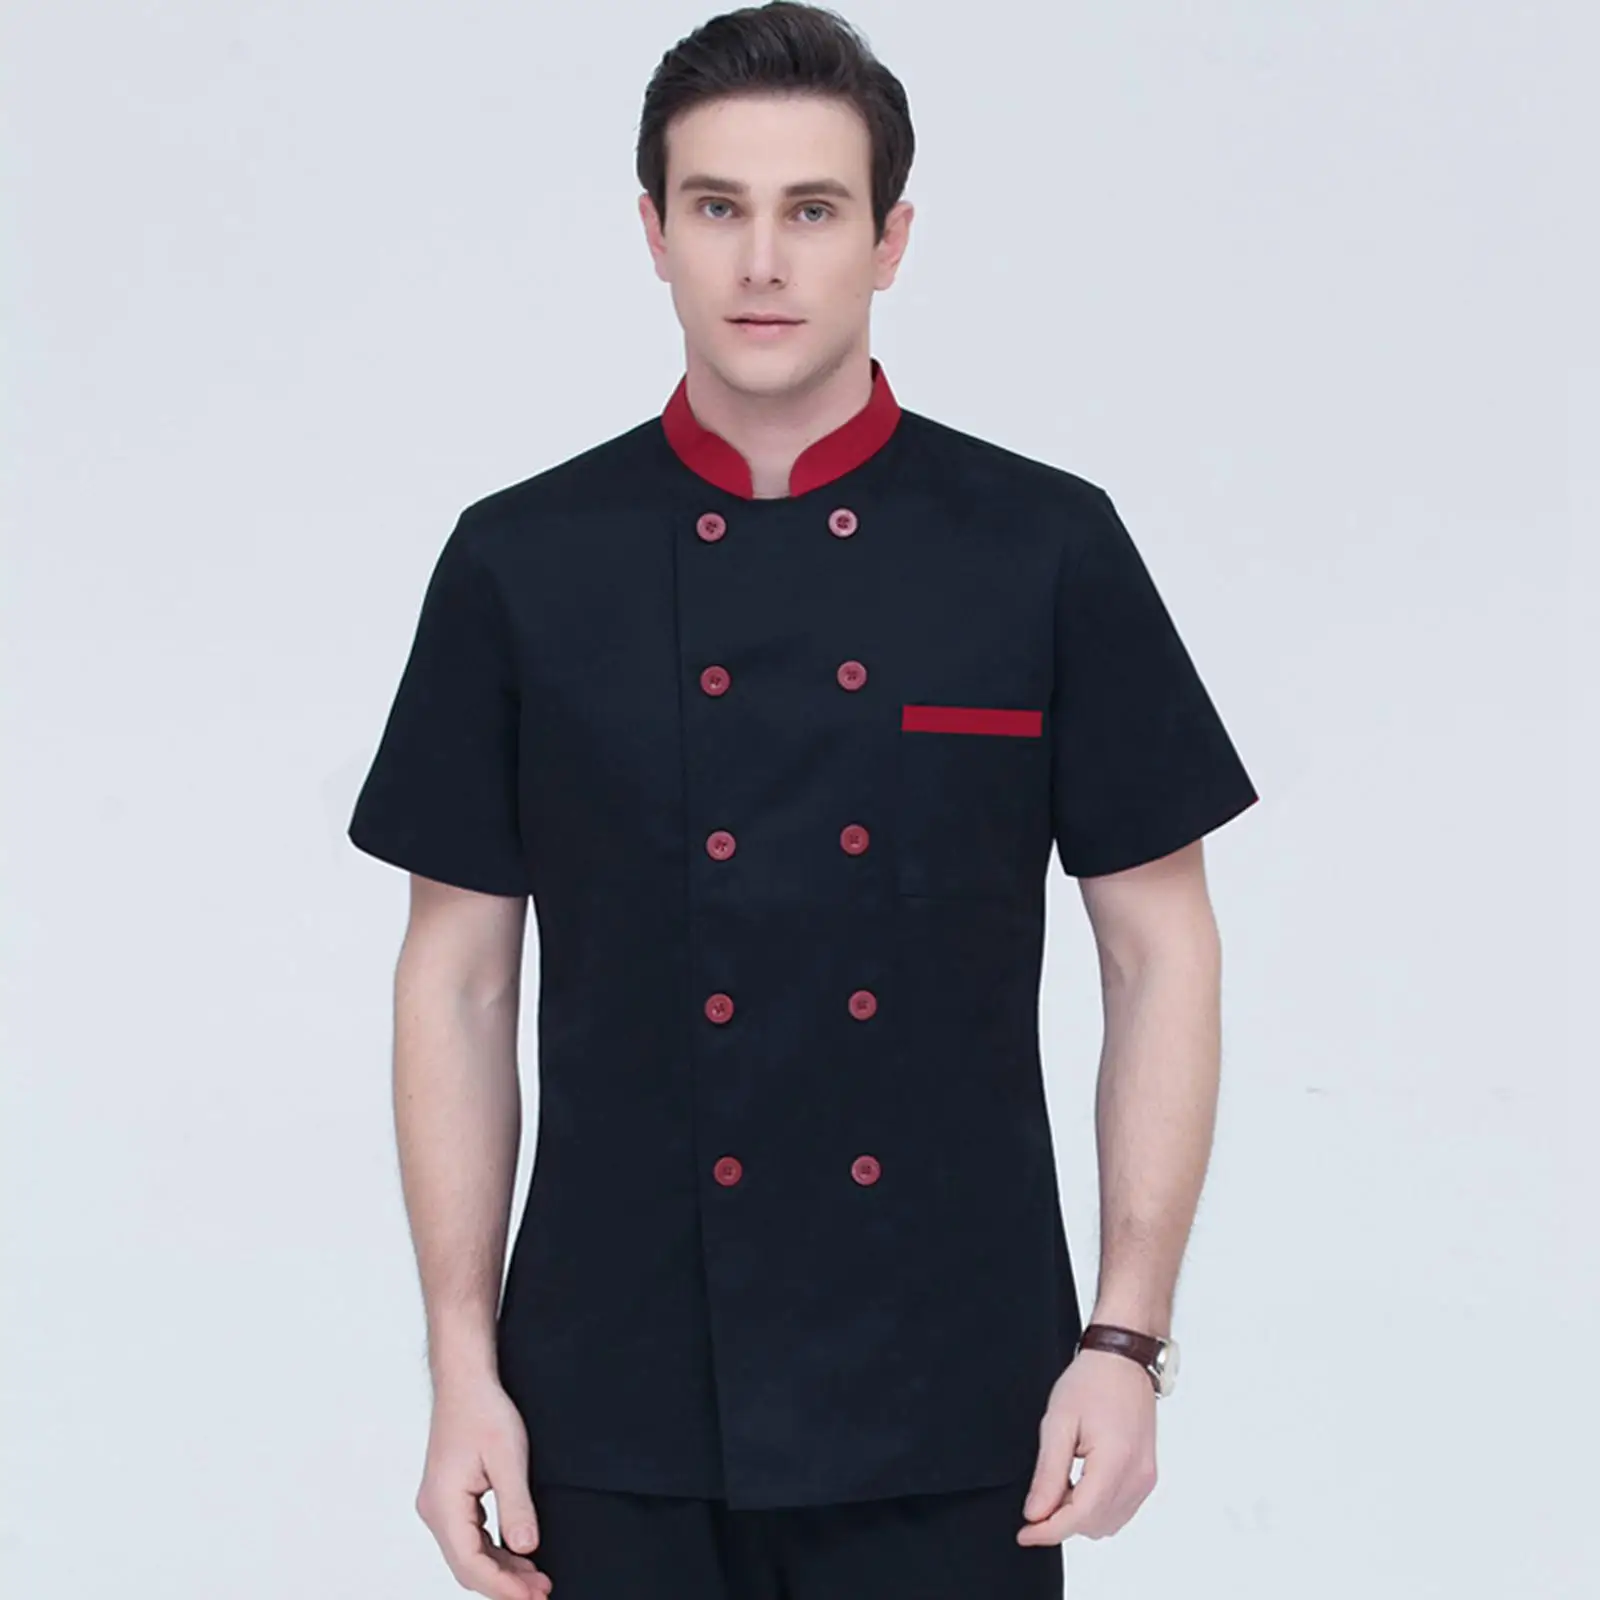 Unisex Work Uniform Lightweight  Abrasion Resistant Cotton Breathable Chef Clothes for Server  Cafe Waitress